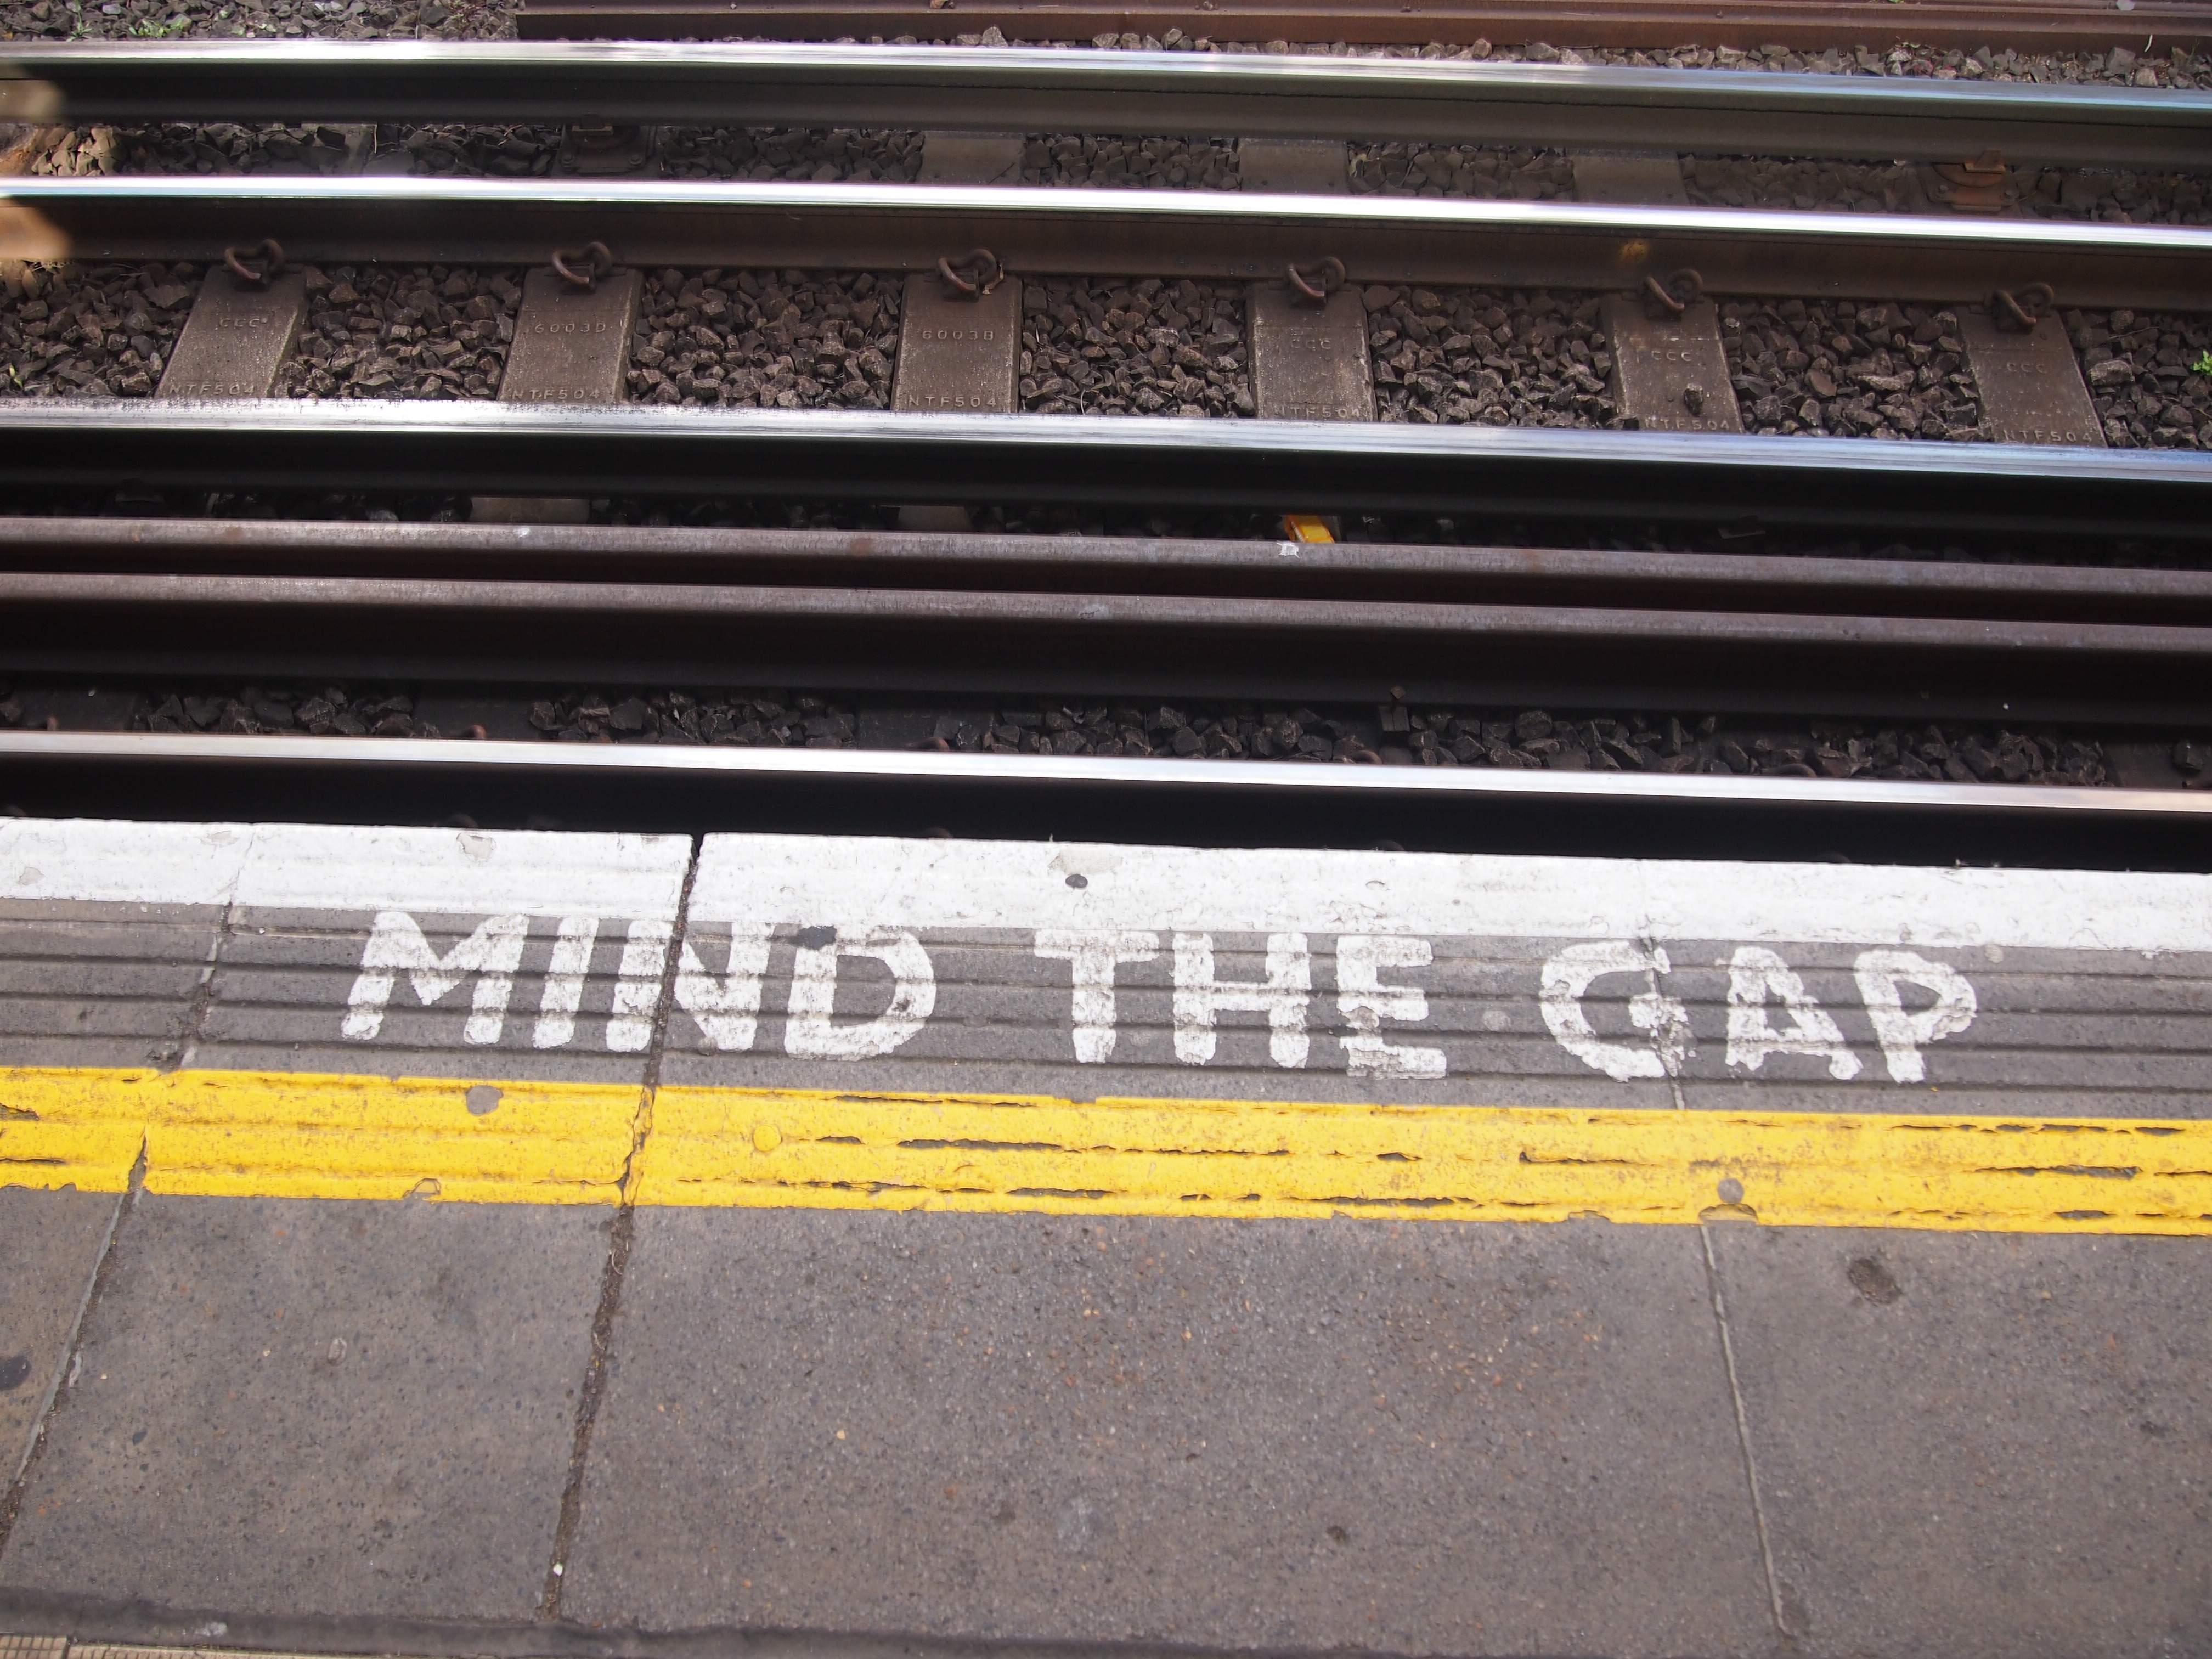 Mind the gap - London Tube